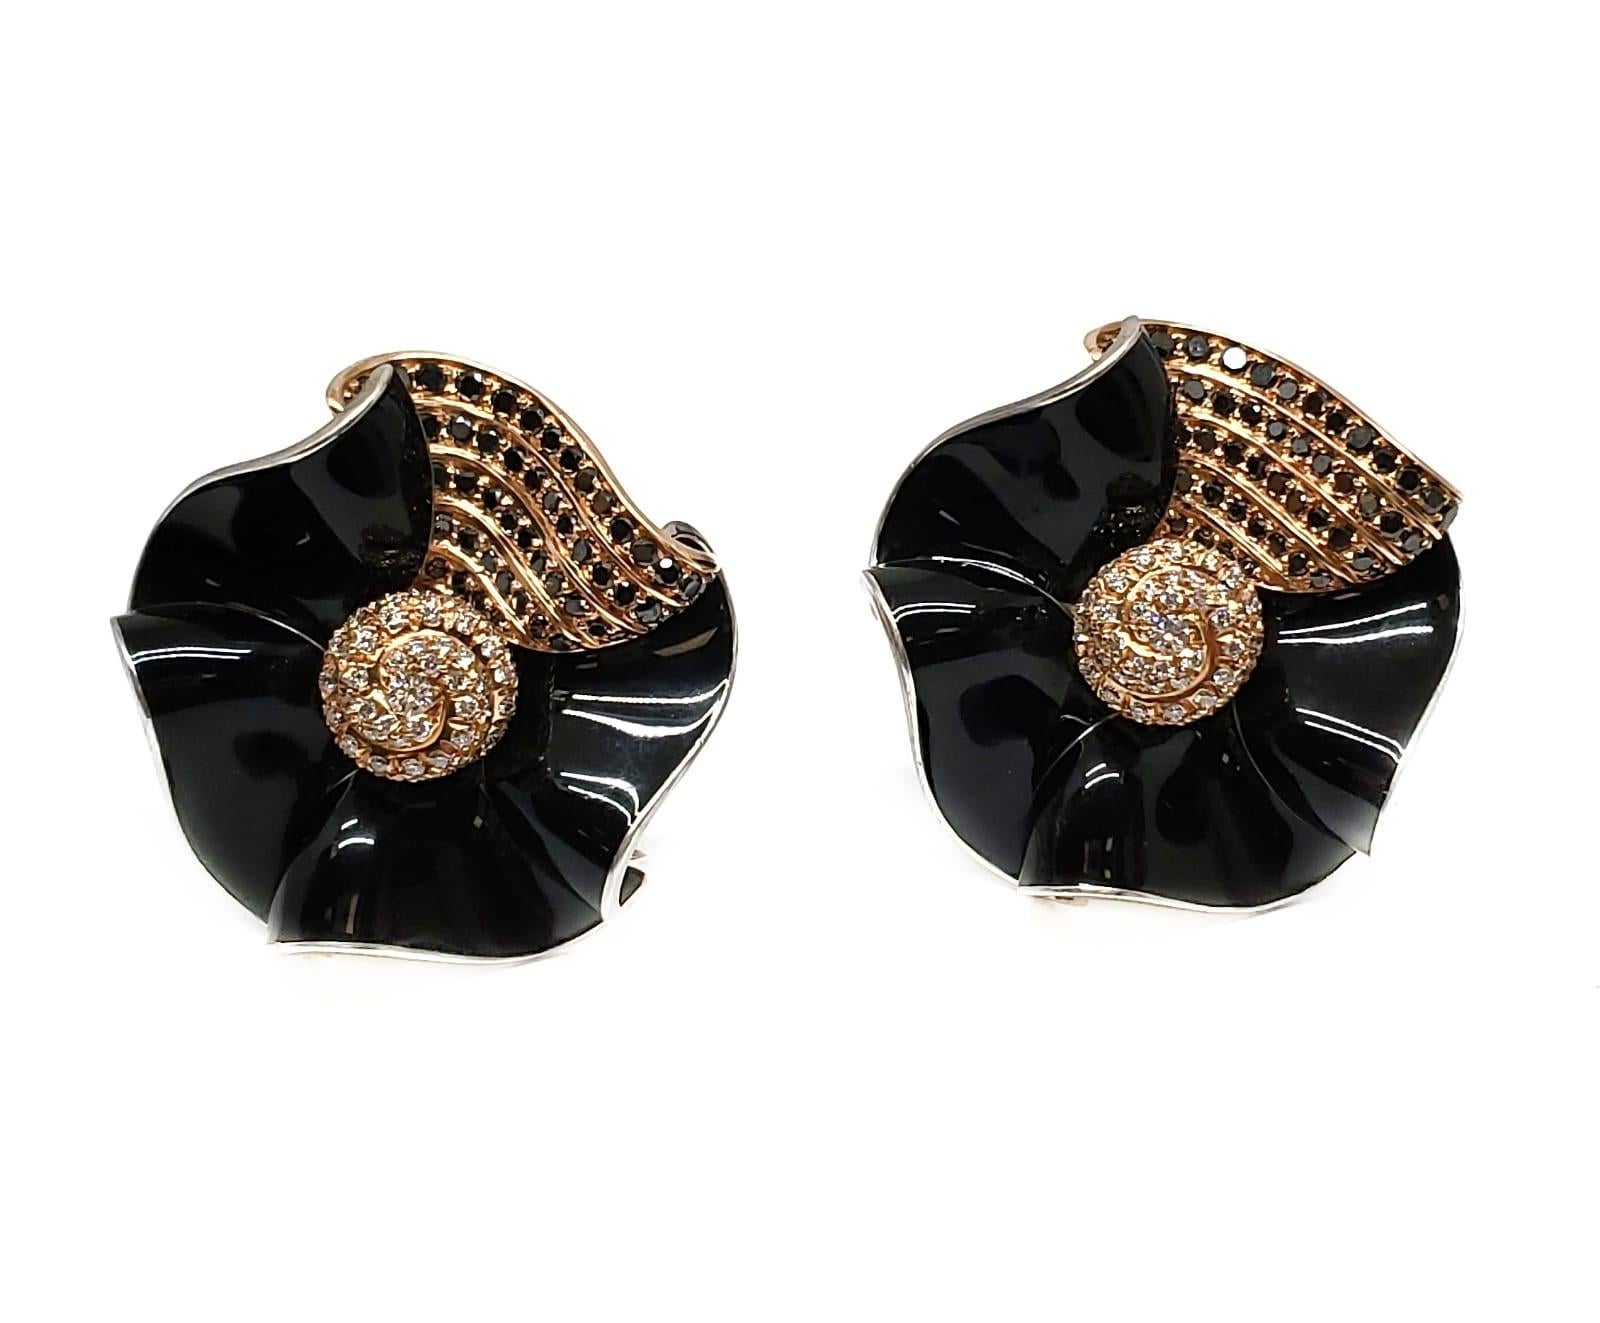 Andreoli Black Diamond Enamel 18 Karat Two-Tone Gold Earrings

These earrings feature:
- 3.22 Carat Black Diamond
- Black Enamel
- 20.00 Gram 18K Two-Tone Gold
- Made In Italy